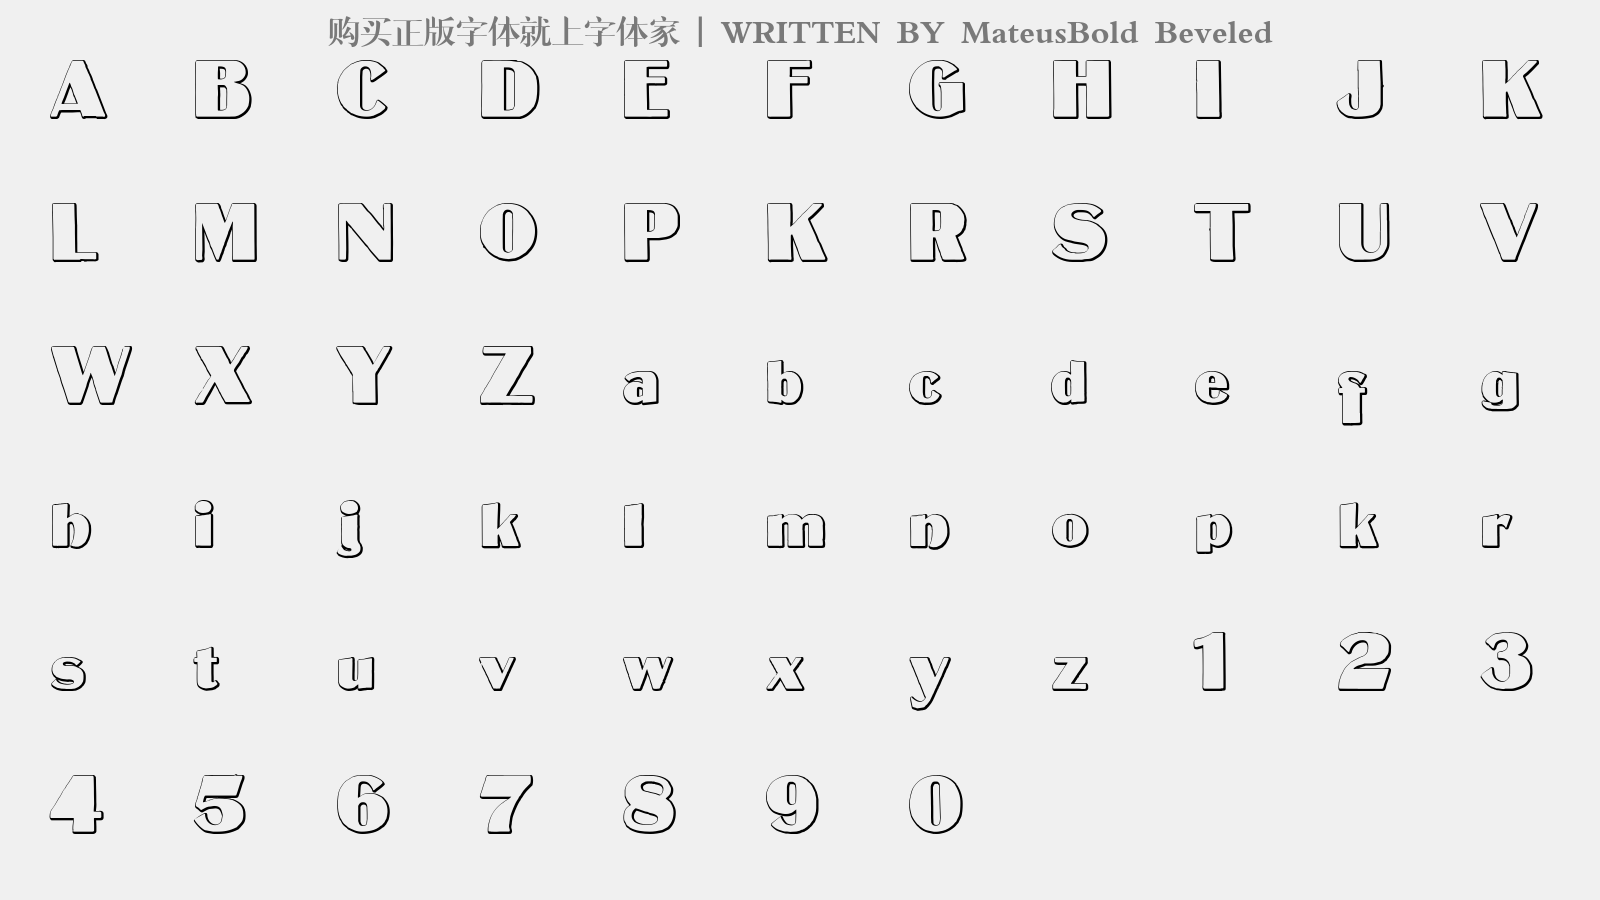 MateusBold Beveled - 大写字母/小写字母/数字